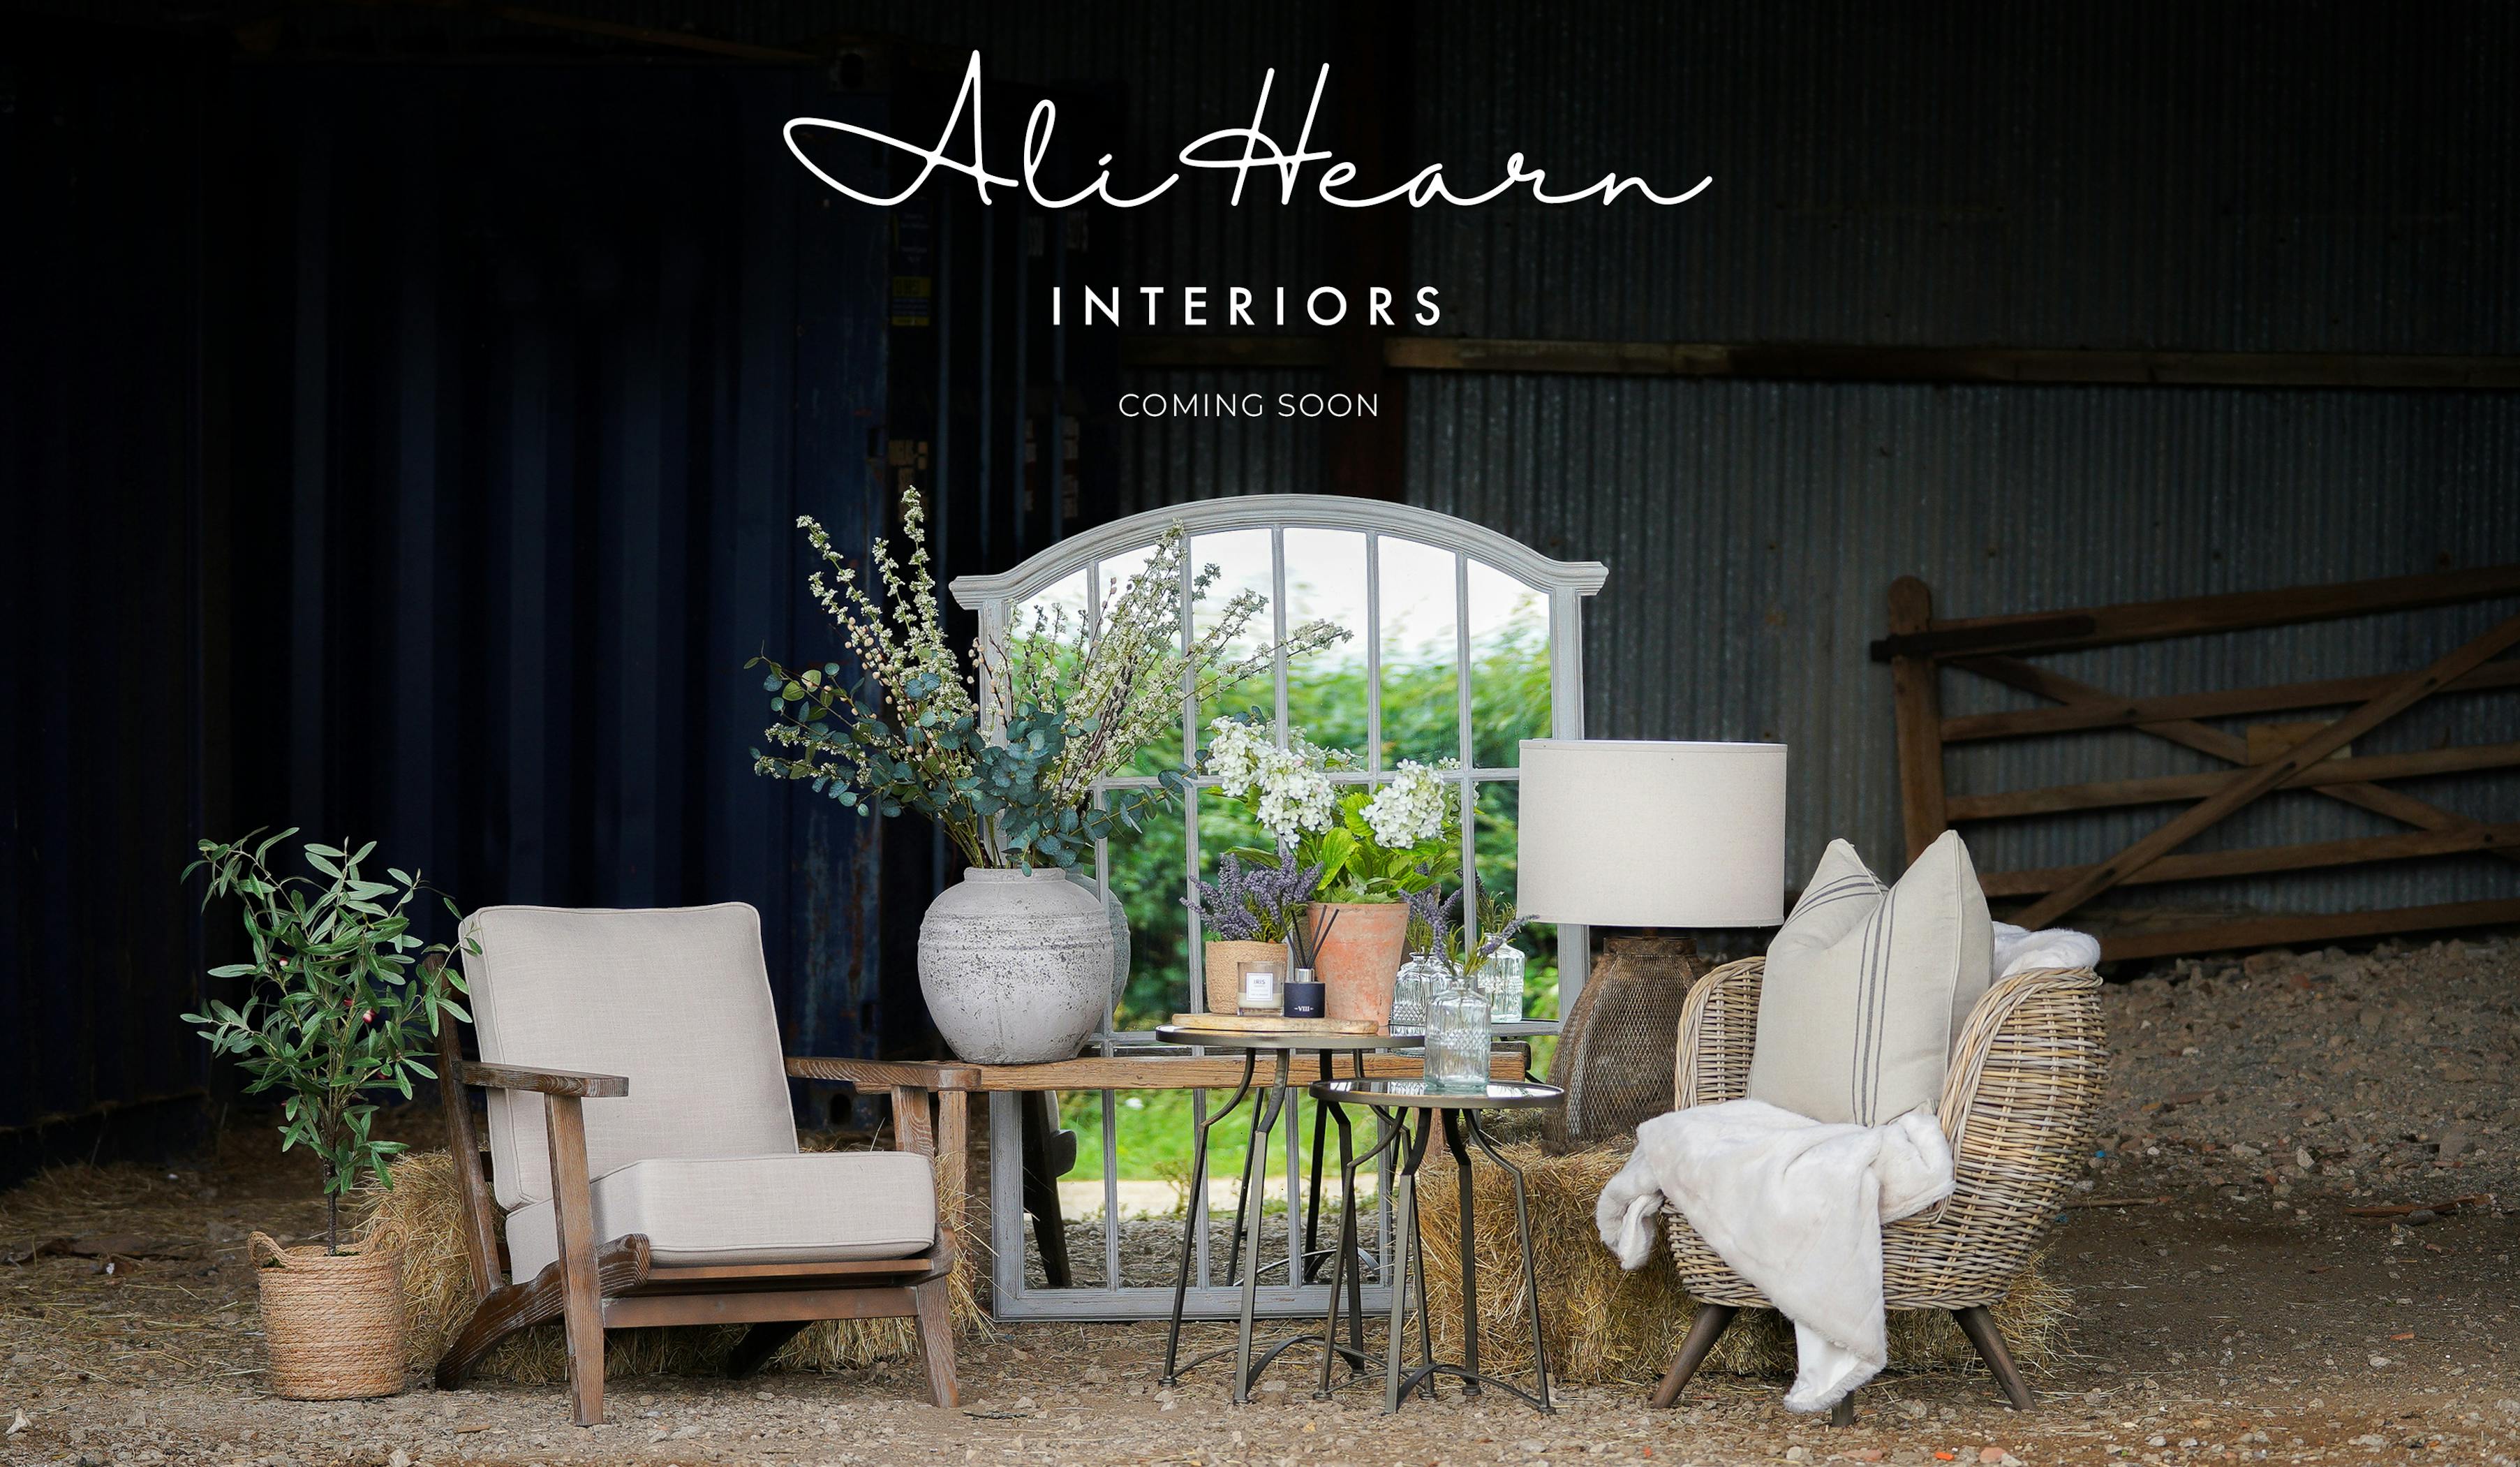 Ali Hearn Interiors - Coming Soon